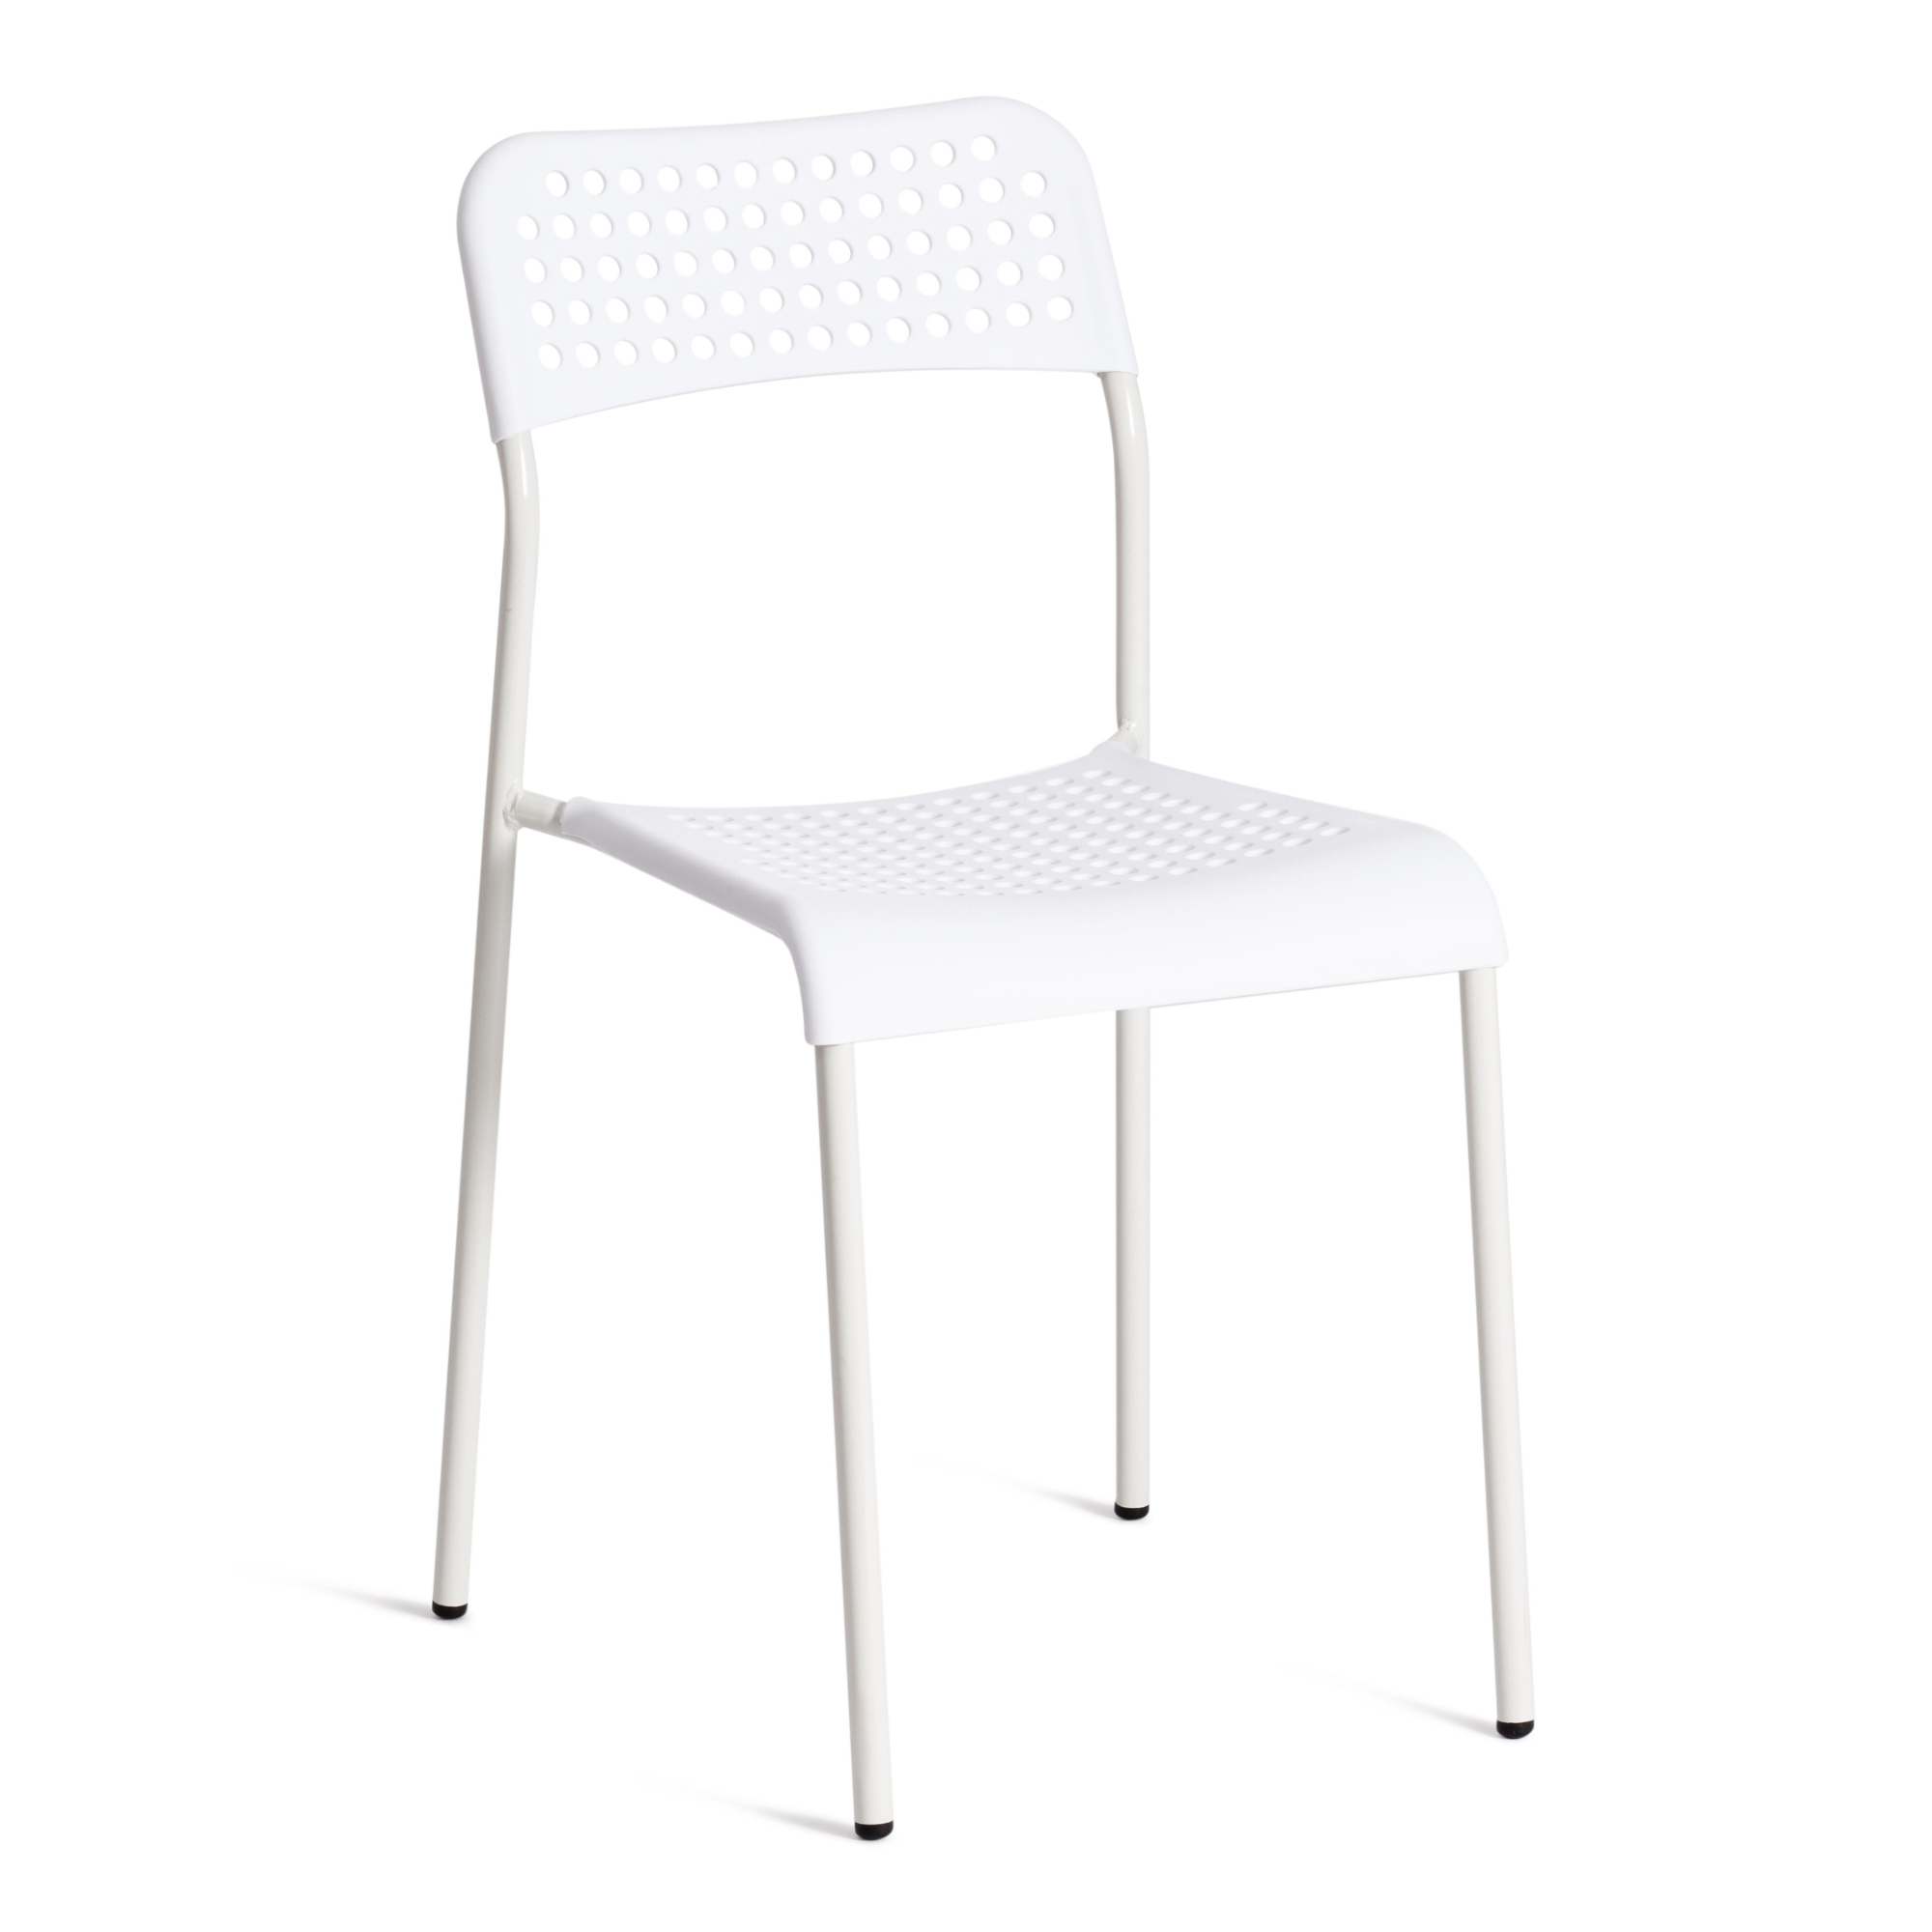 Стул ТС Adde белый пластиковый с металлическими ножками 39х49х78 см стул тс cindy chair пластиковый с ножками из бука бежевый 45х51х82 см